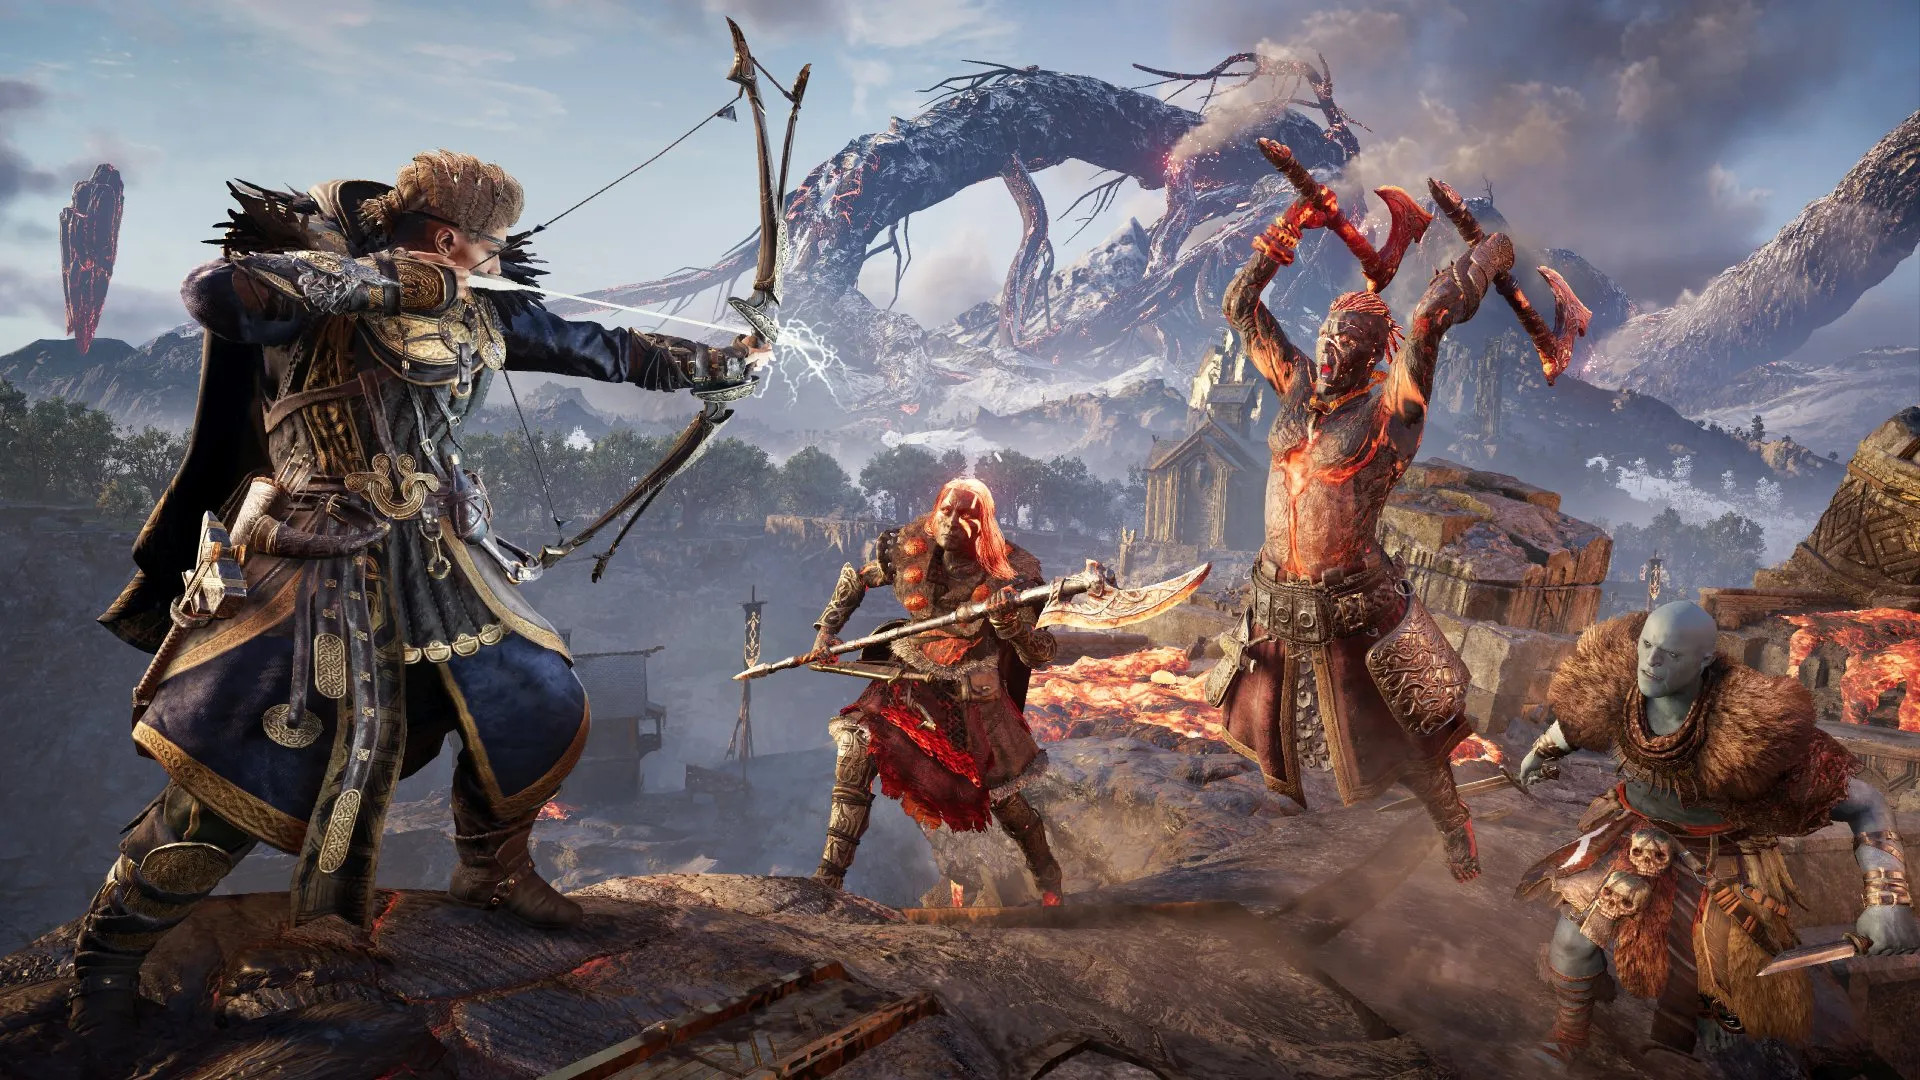 Havi fighting fiery enemies in Assassin's Creed Valhalla: Dawn of Ragnarok